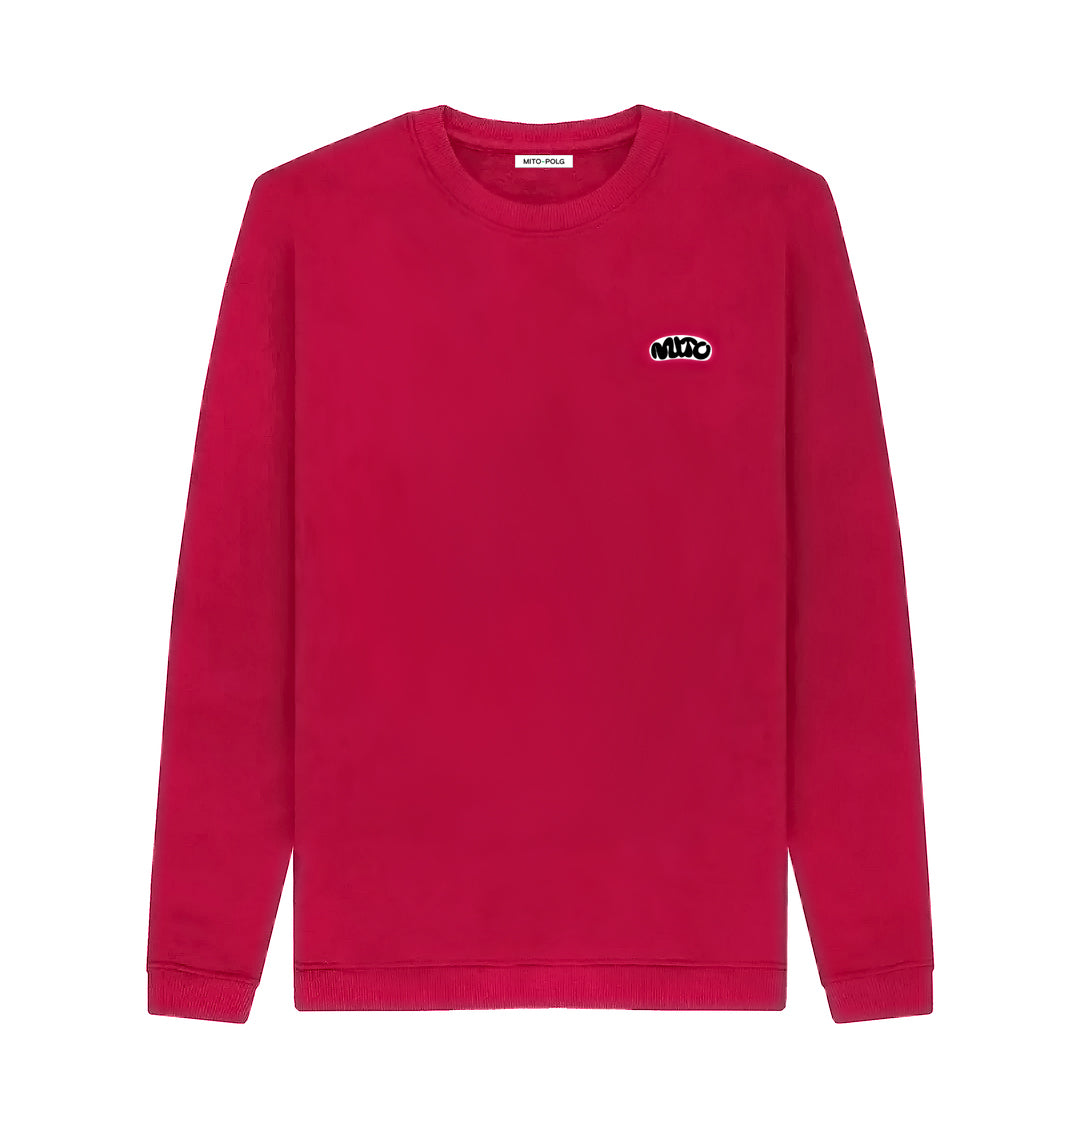 Red Printed MITO Crewneck Sweatshirt